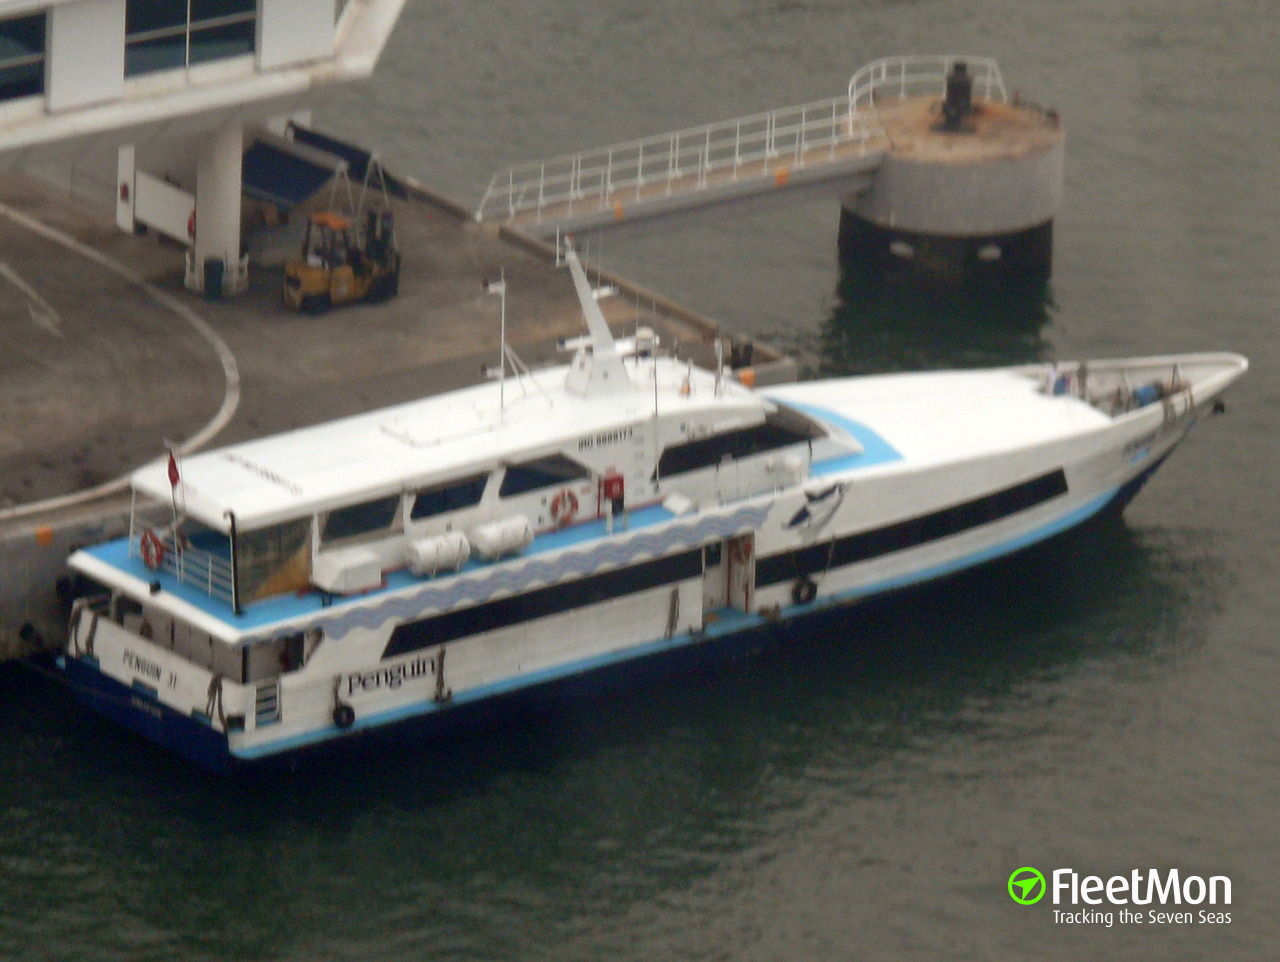 Ferry Sindo 31 ran aground off Lobam island, Singapore